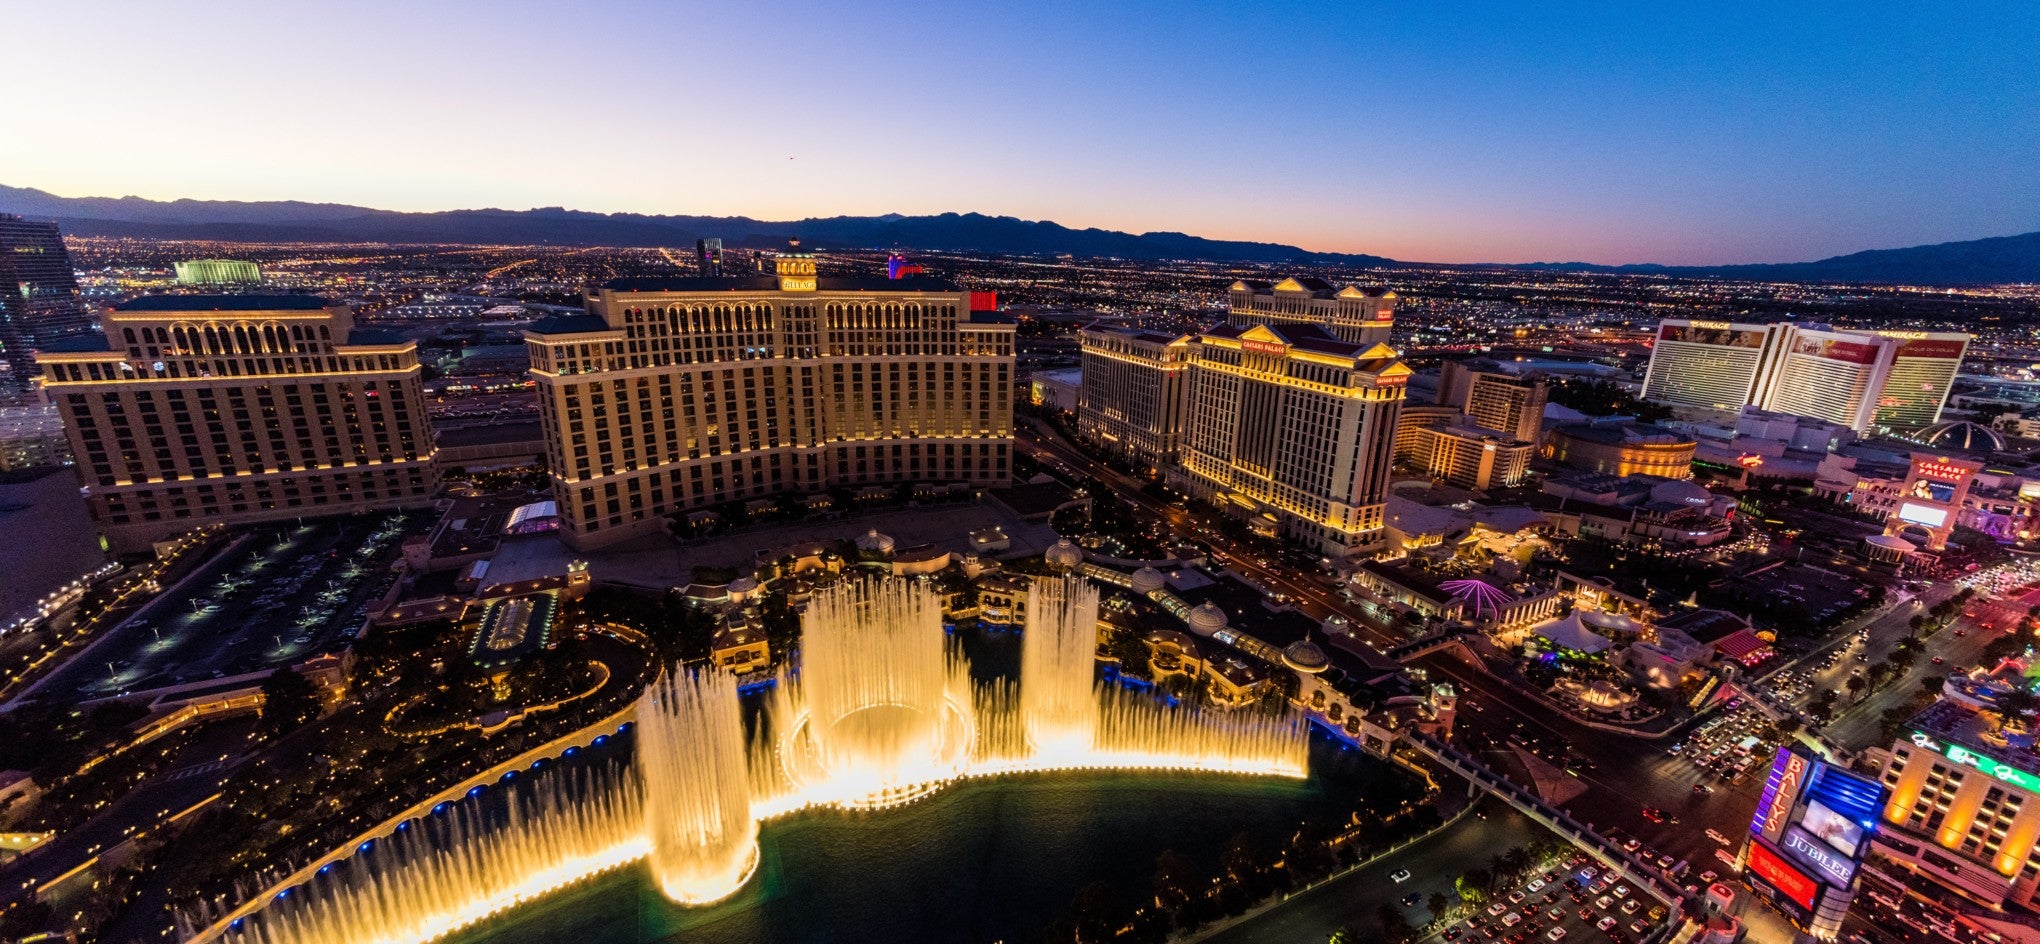 10 Best Websites for Las Vegas Vacation Packages & Deals [2022]